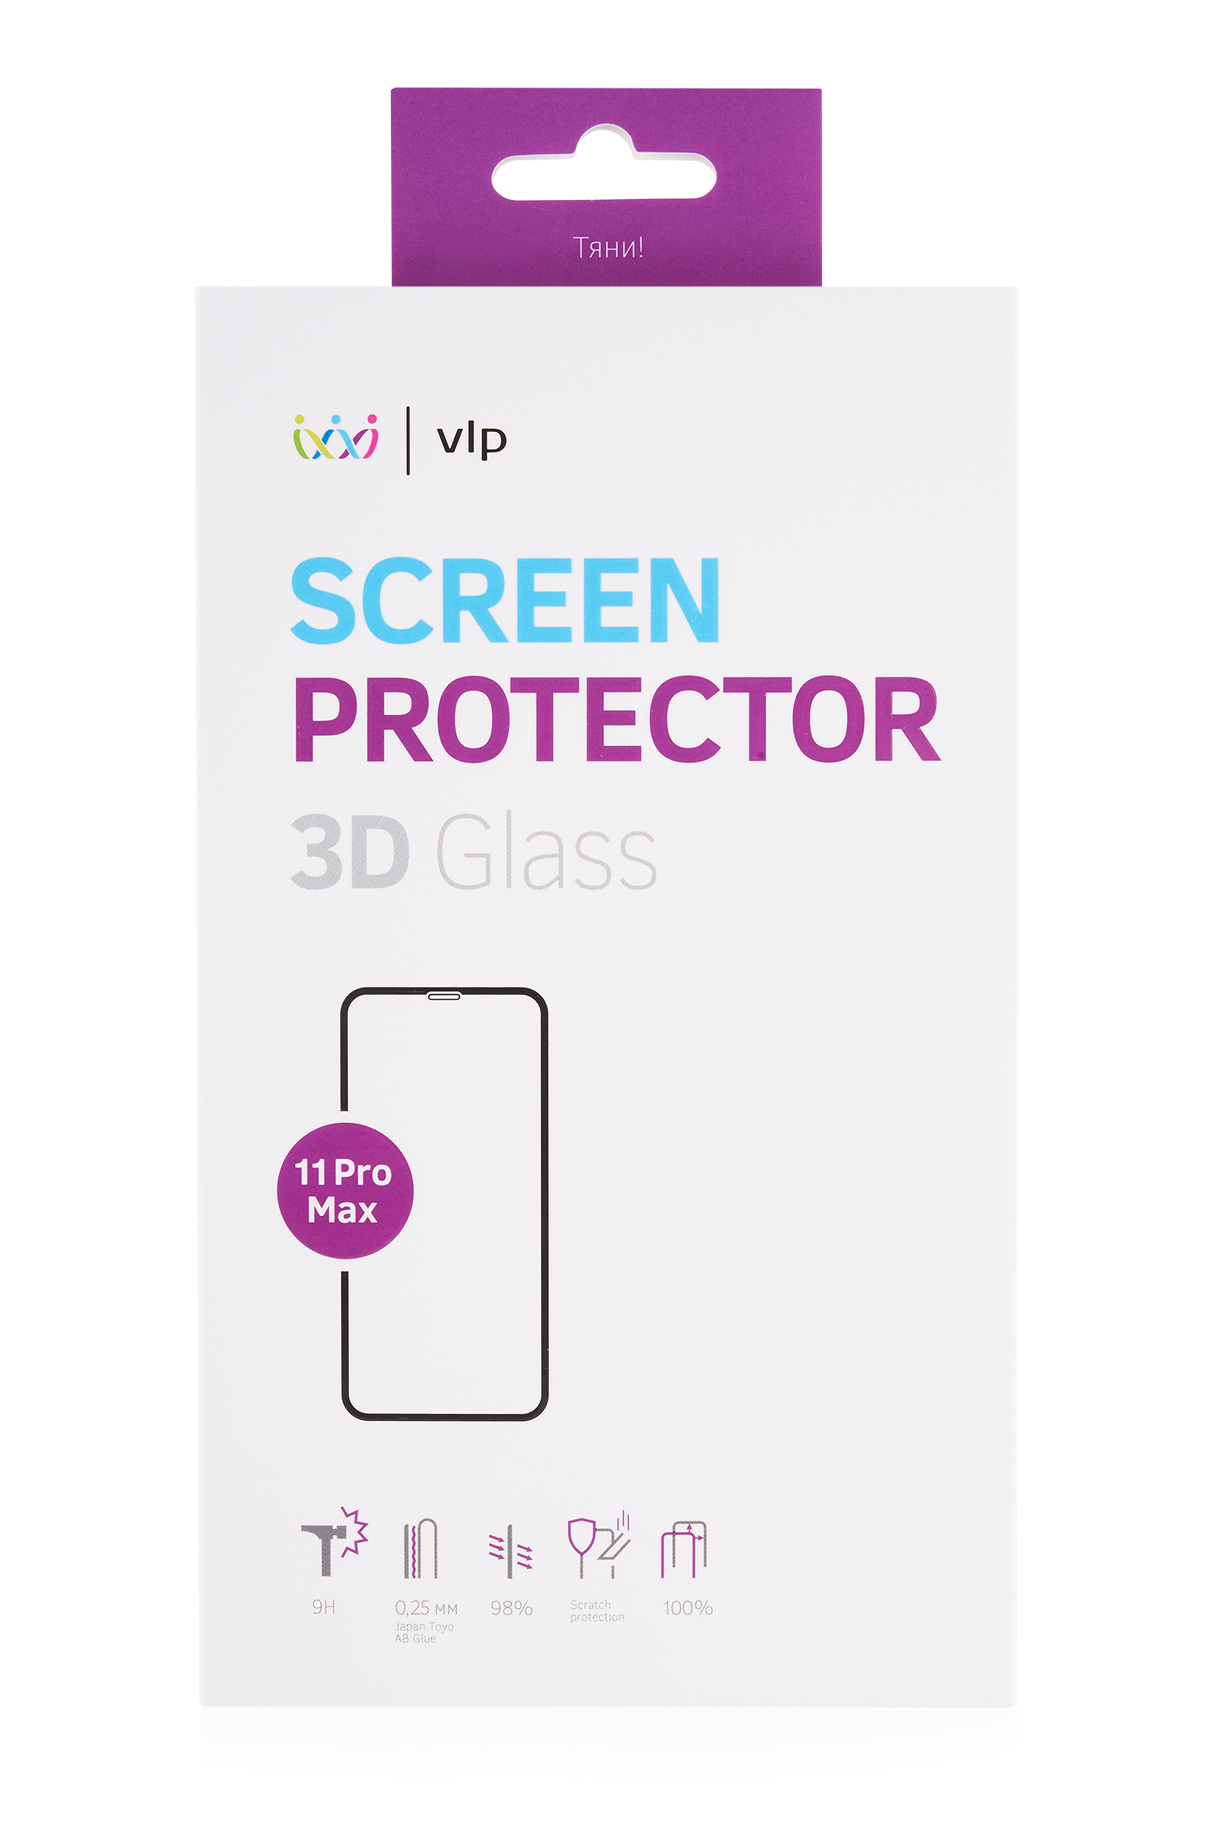 Стекло 3D защитное VLP для iPhone 11 ProMax/XsMax, олеофобное, с черной рамкой стекло 3d защитное vlp для iphone 11 pro xs x олеофобное с черной рамкой